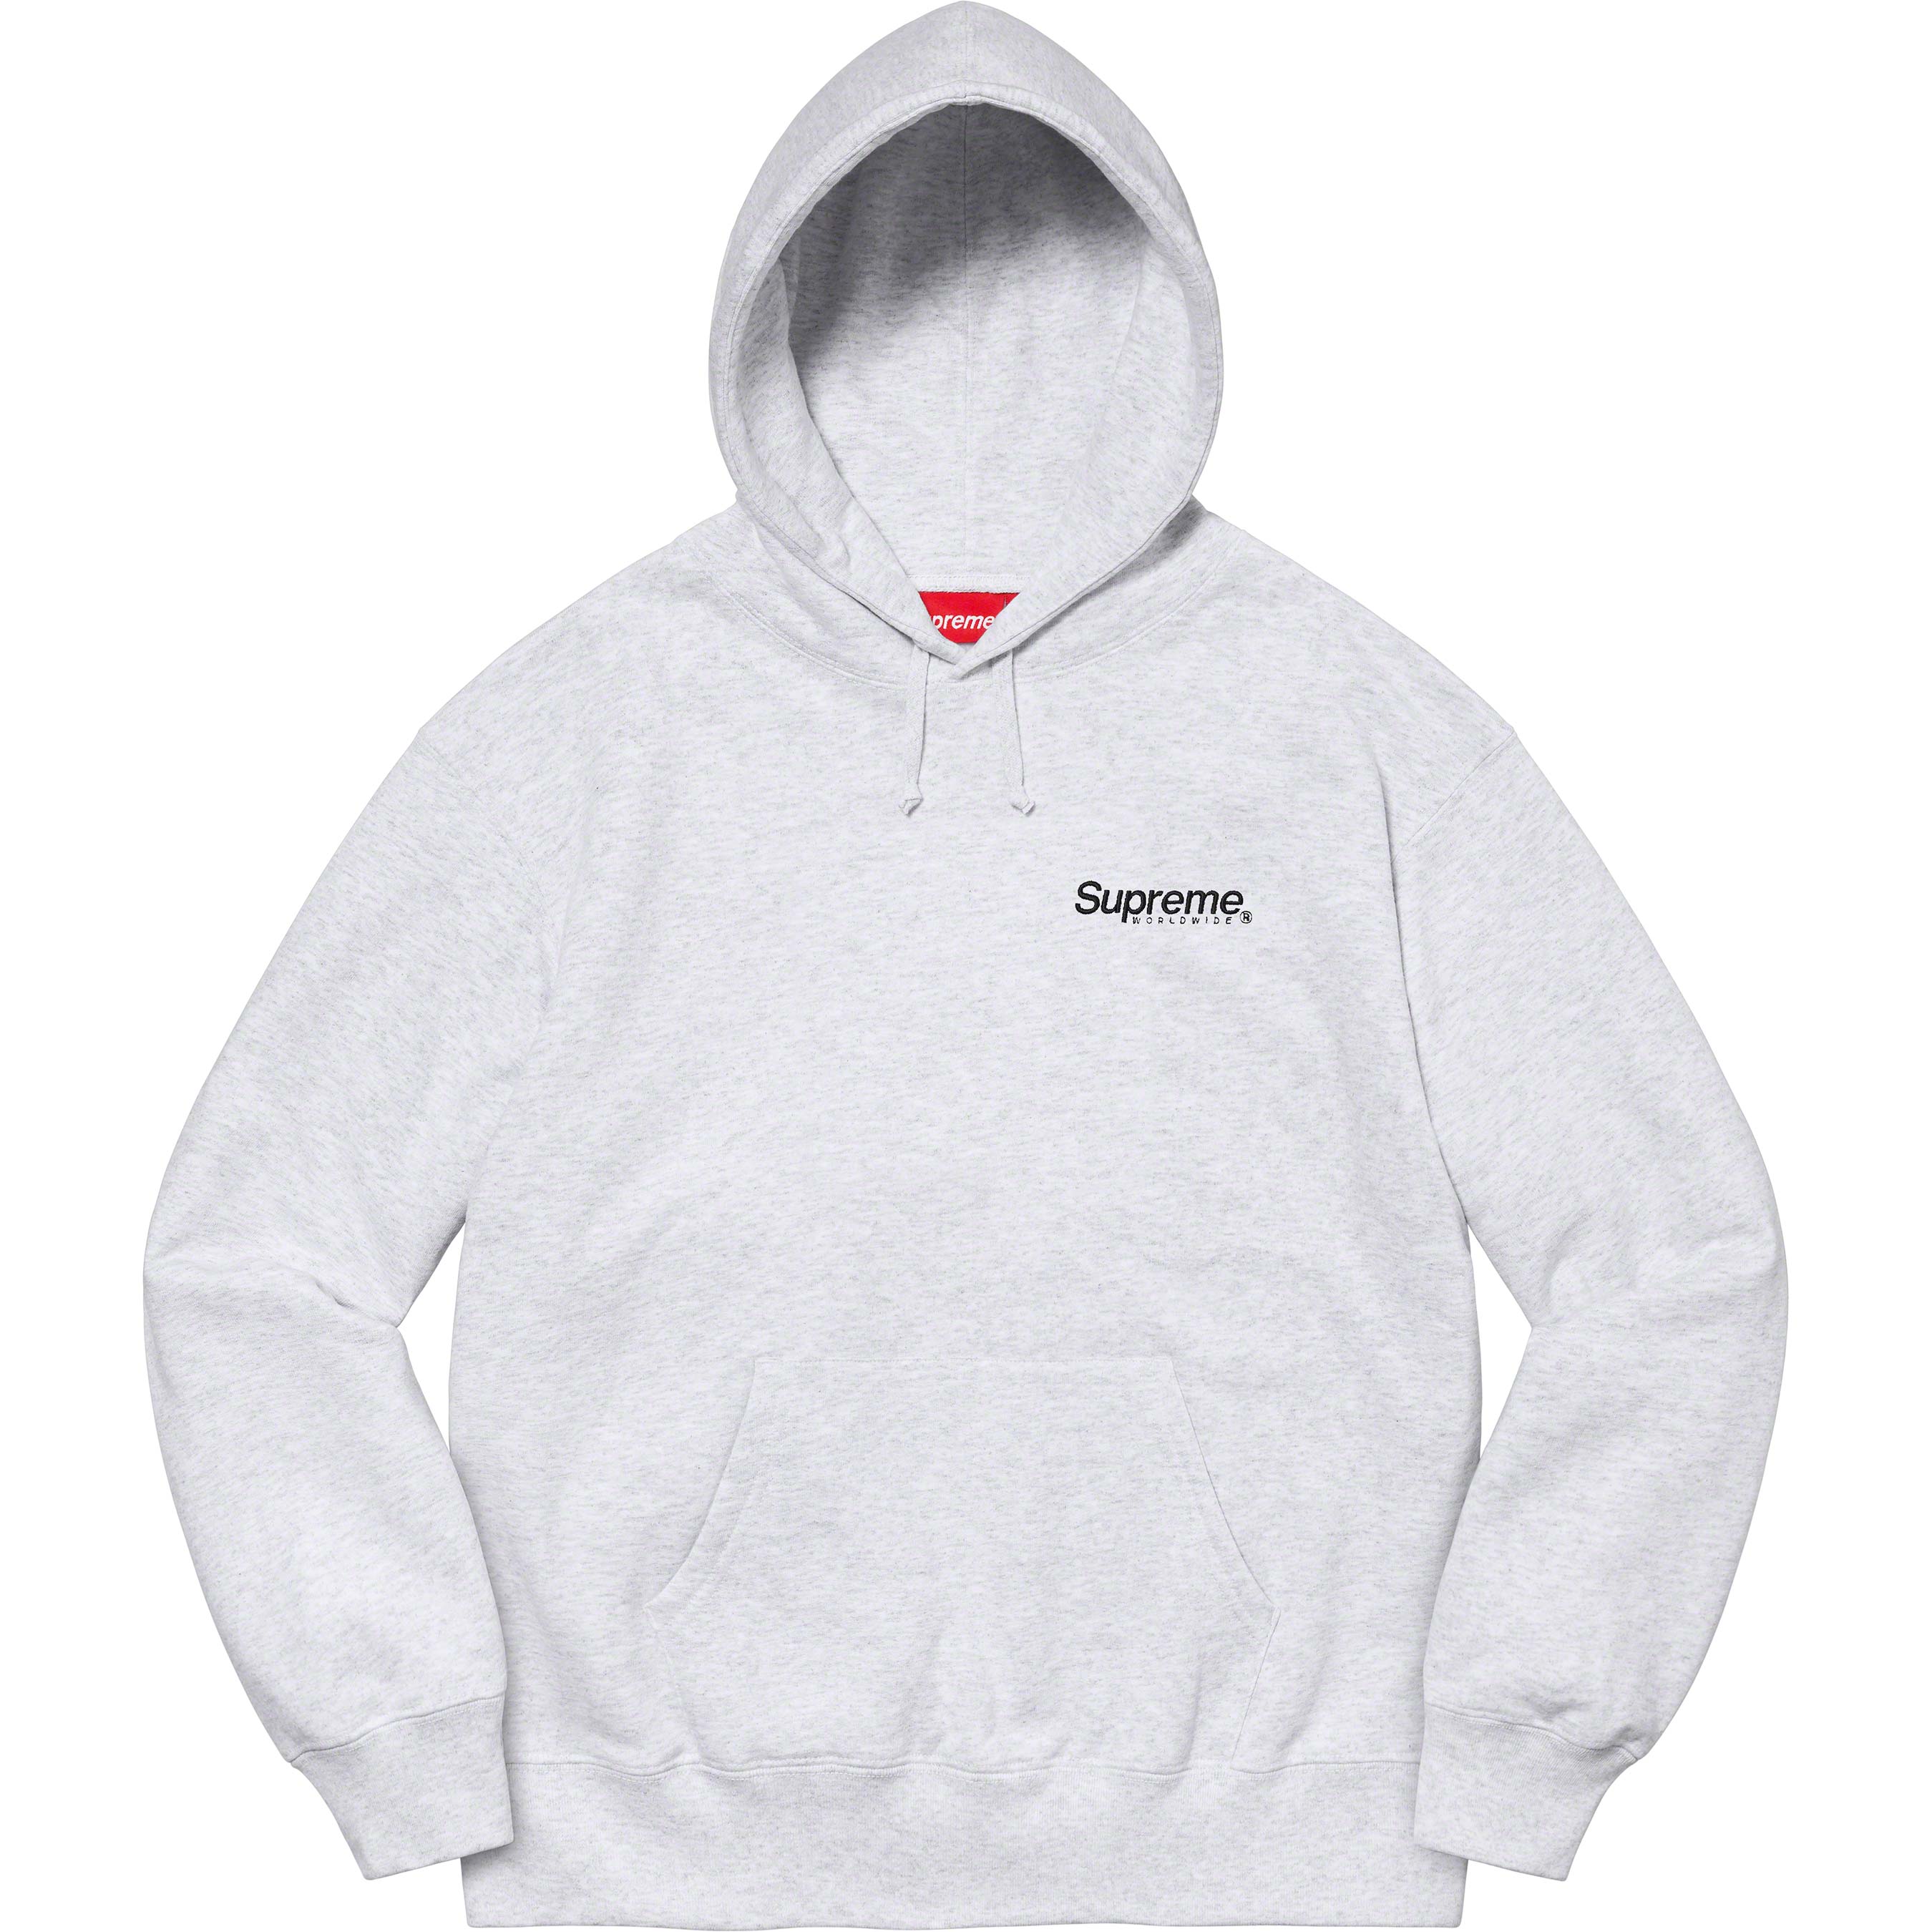 Worldwide Hooded Sweatshirt - spring summer 2023 - Supreme